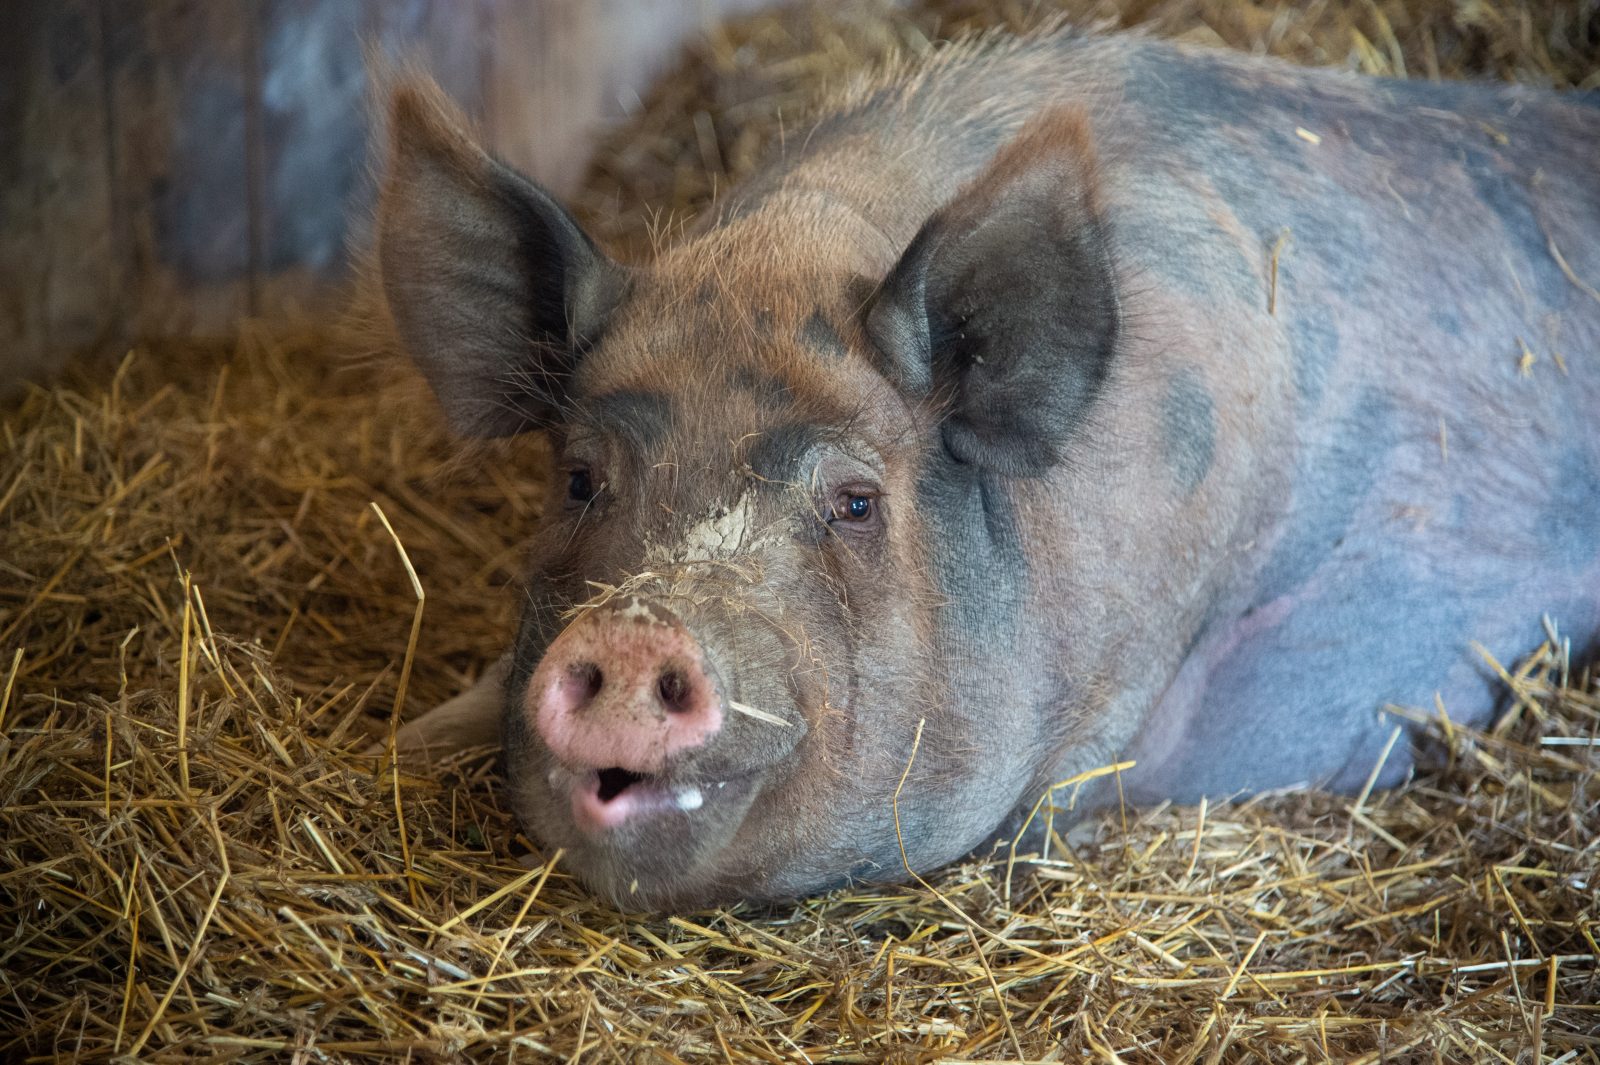 Bitsy pig at Farm Sanctuary's New York shelter